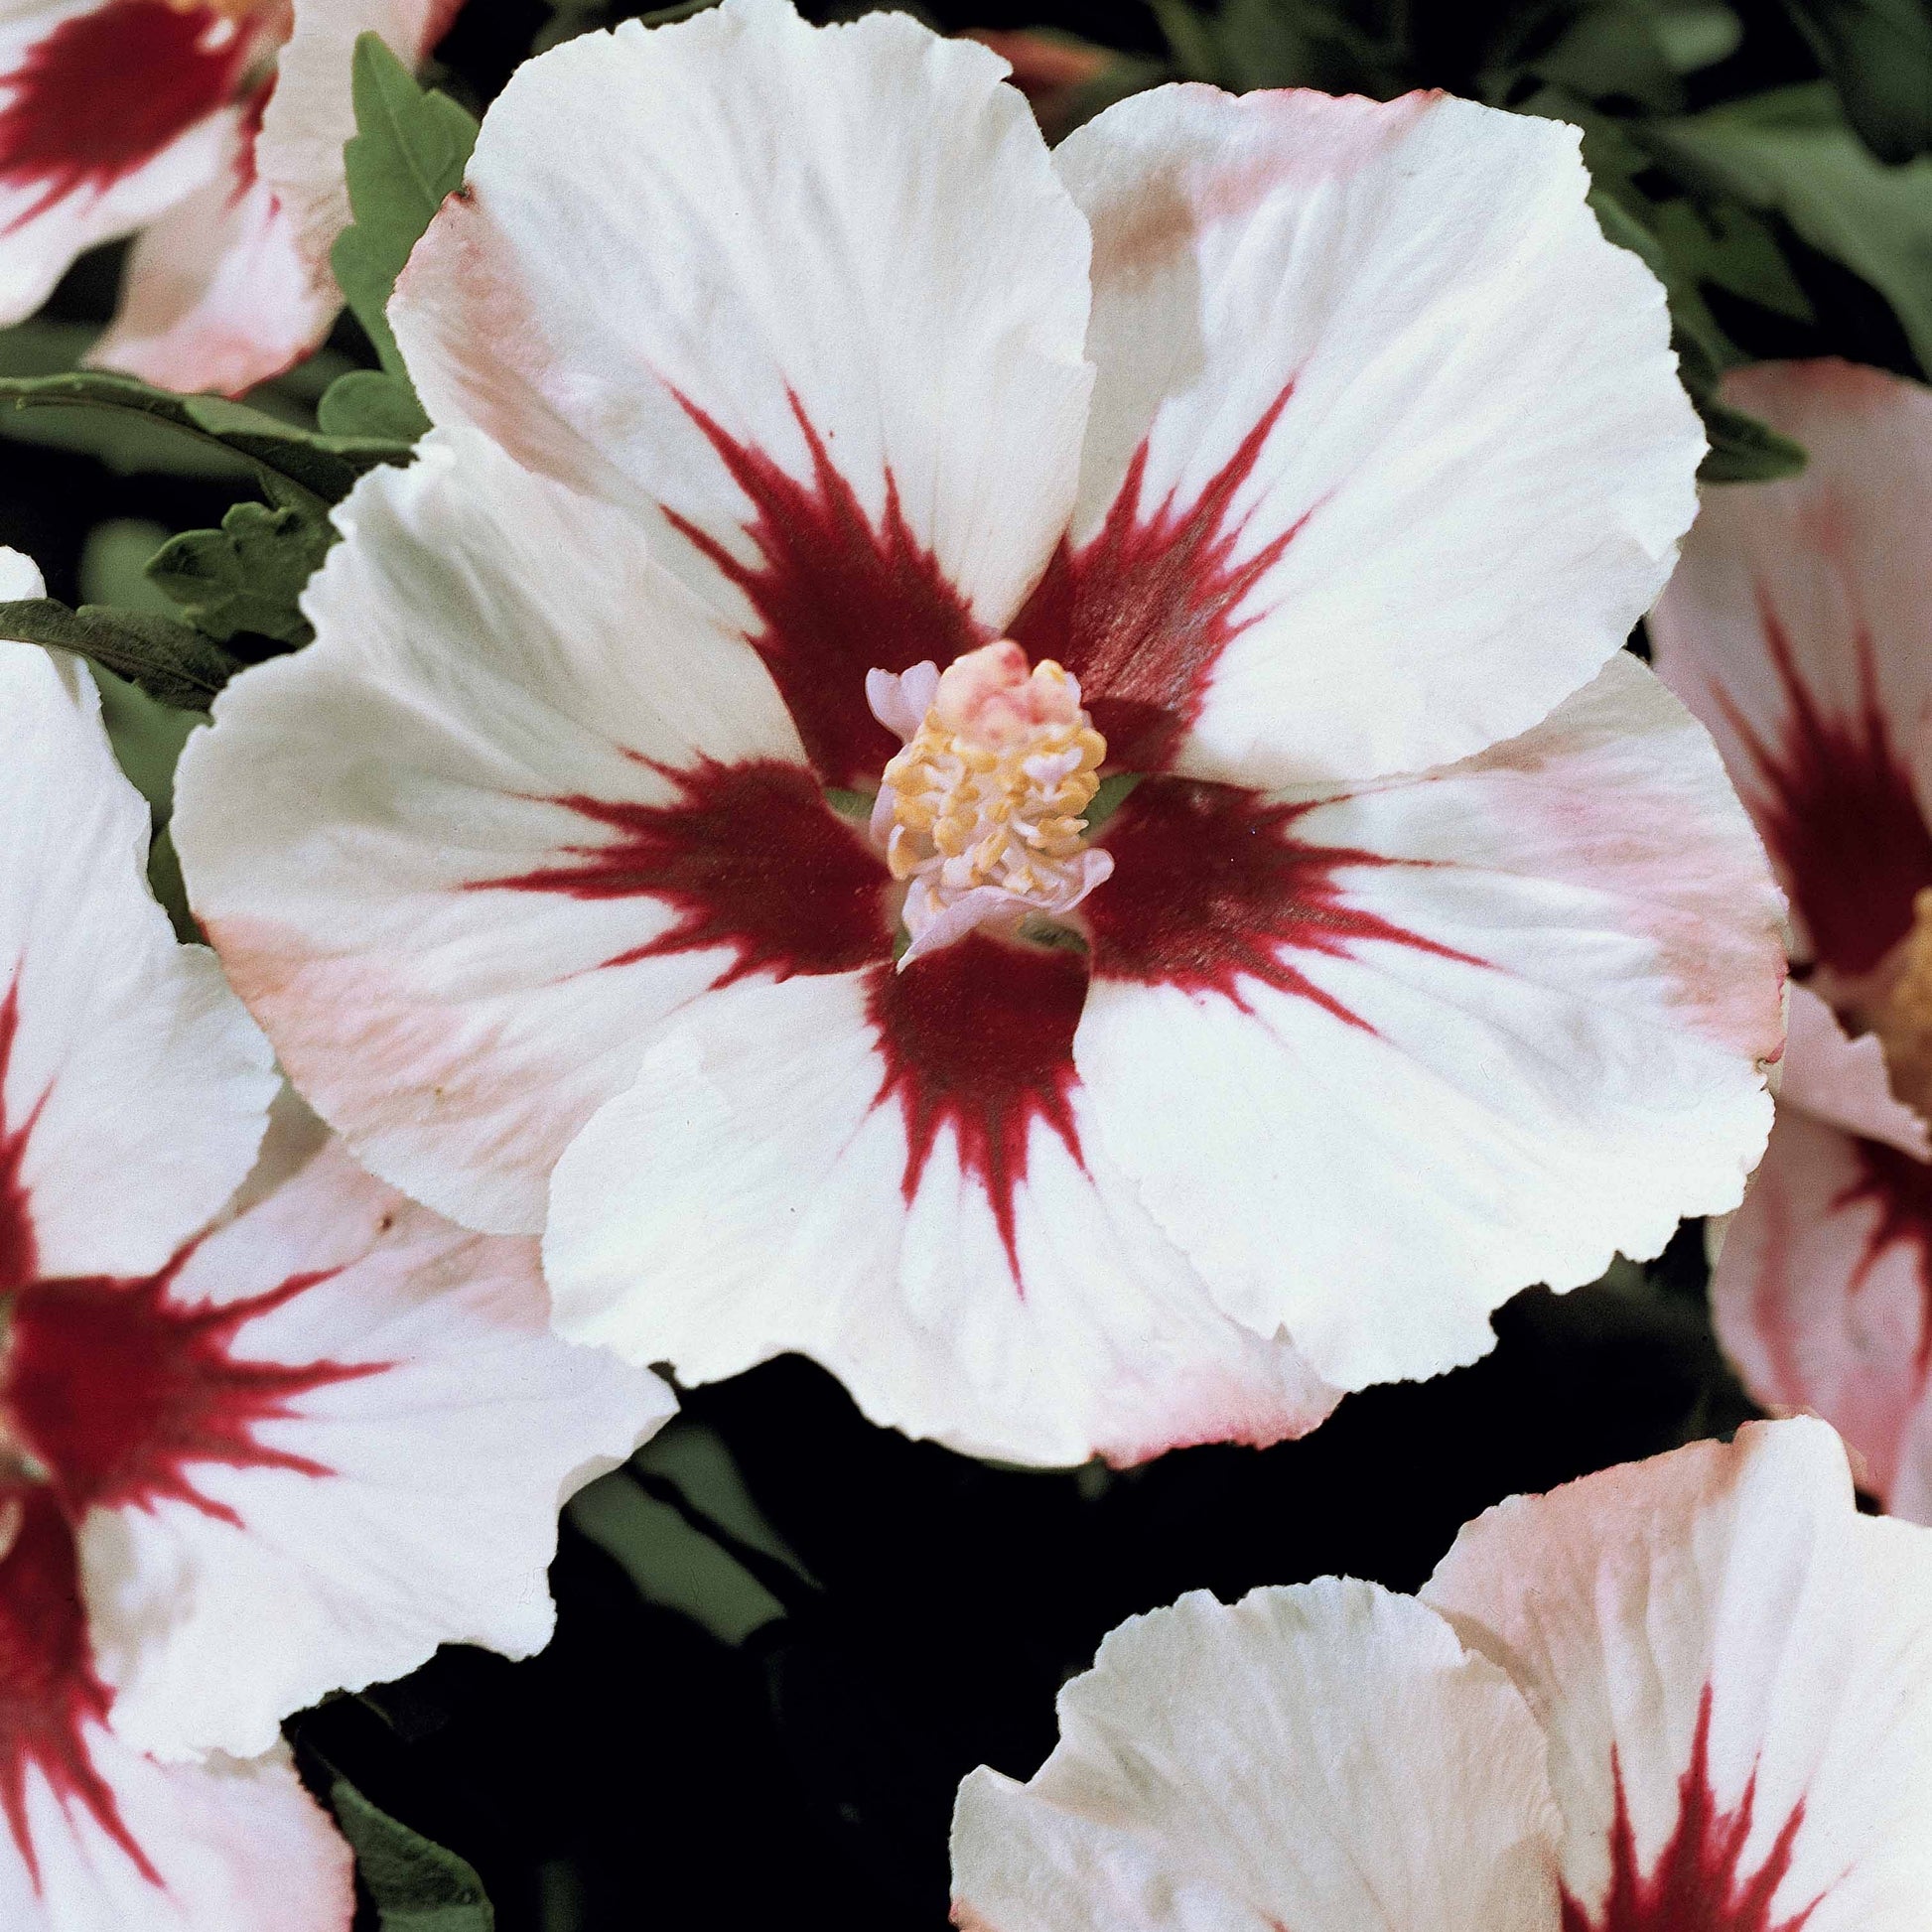 Hibiscus de jardin sur tige blanc/rouge - Bakker.com | France